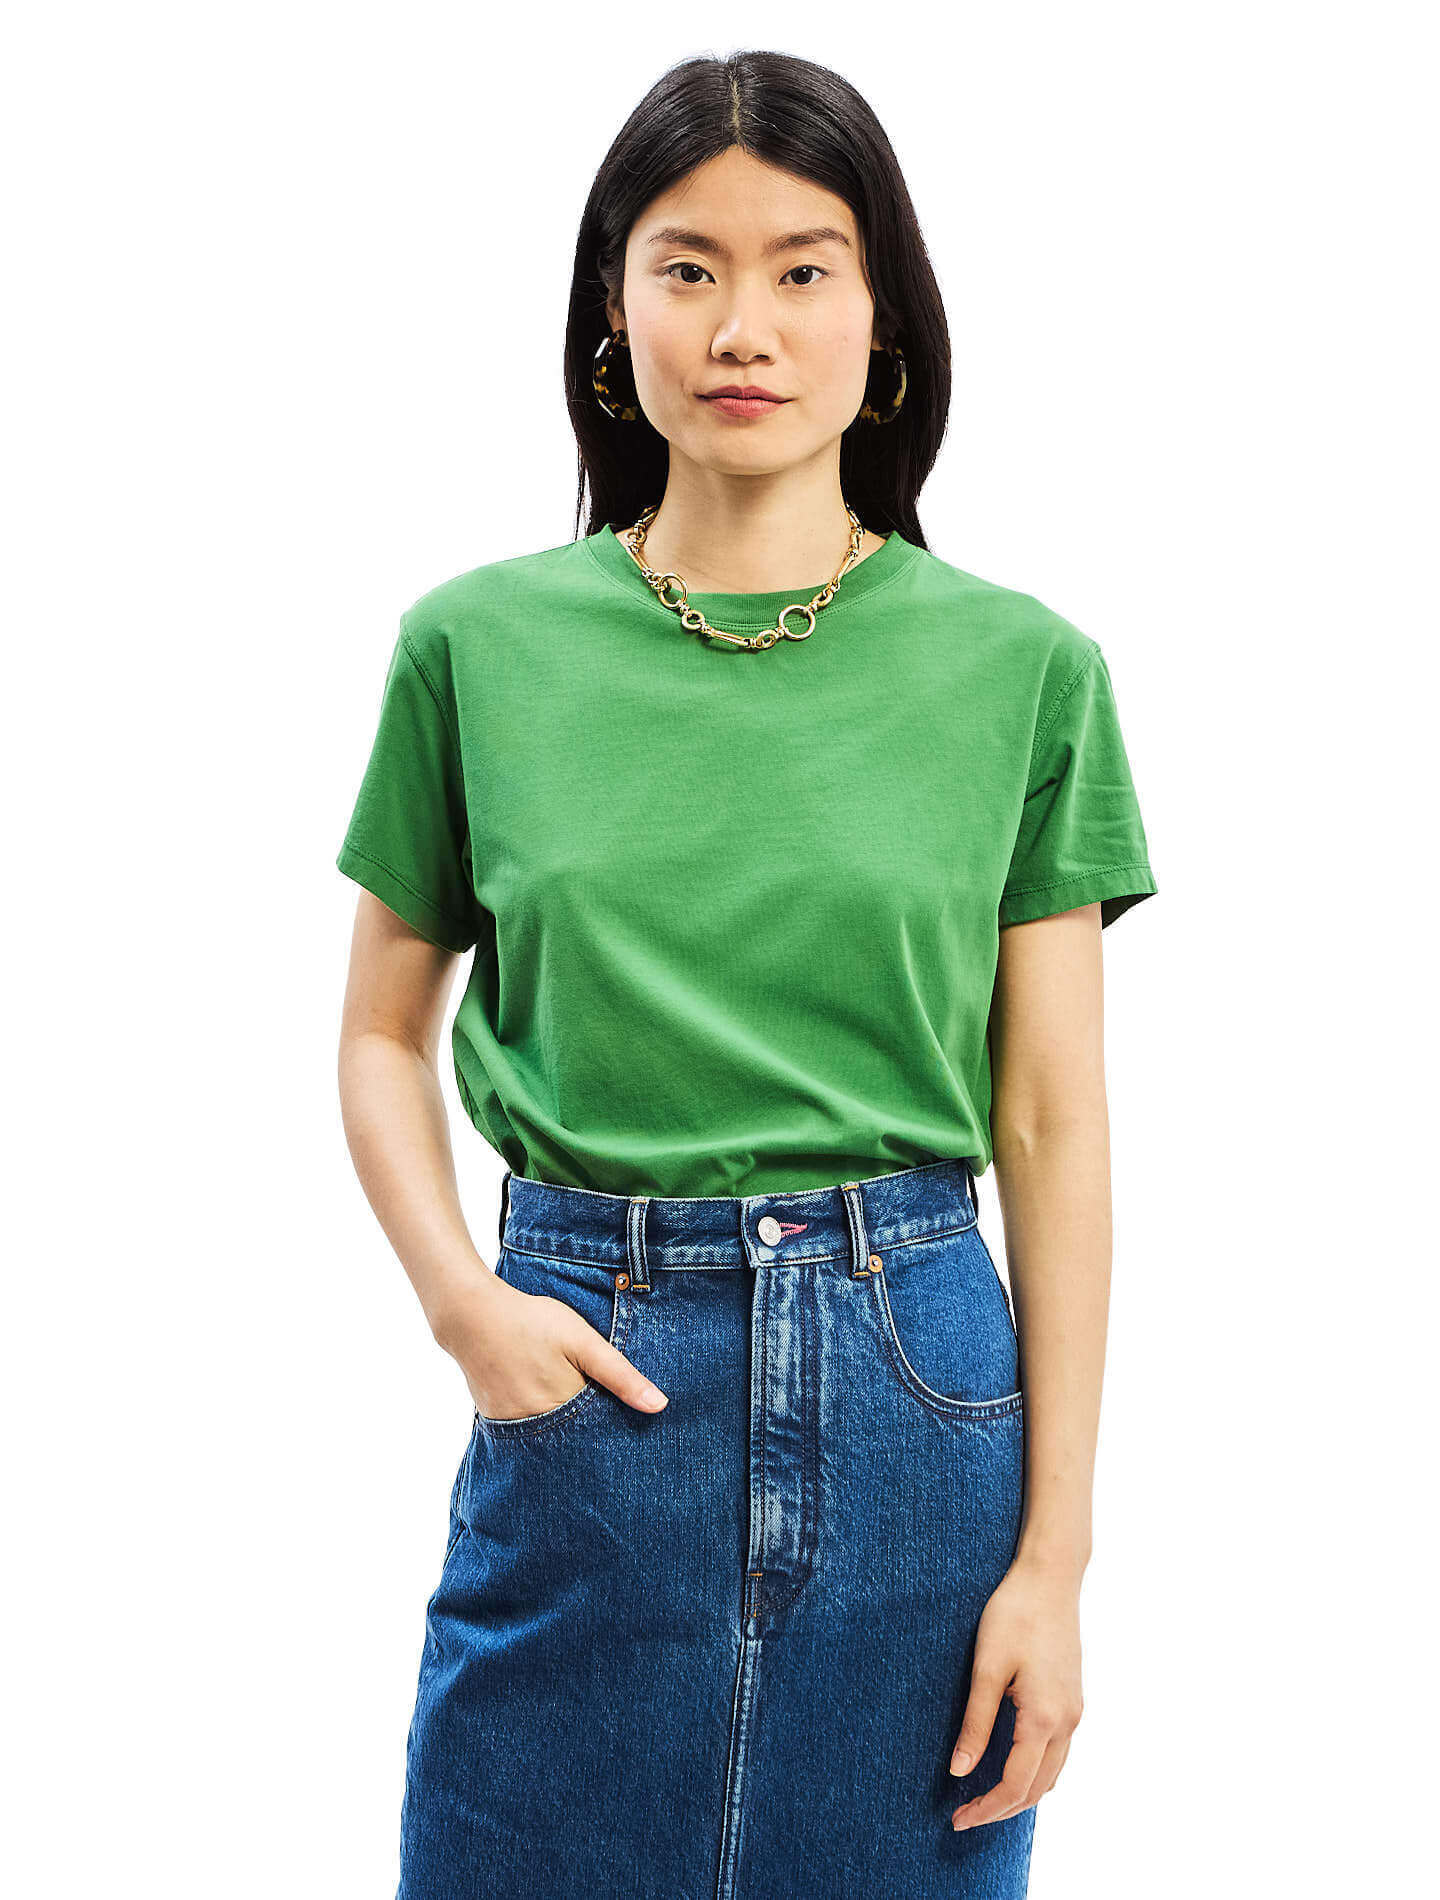 Le tee-shirt Iconic Willie® jersey bio-recyclé Vert plante verte